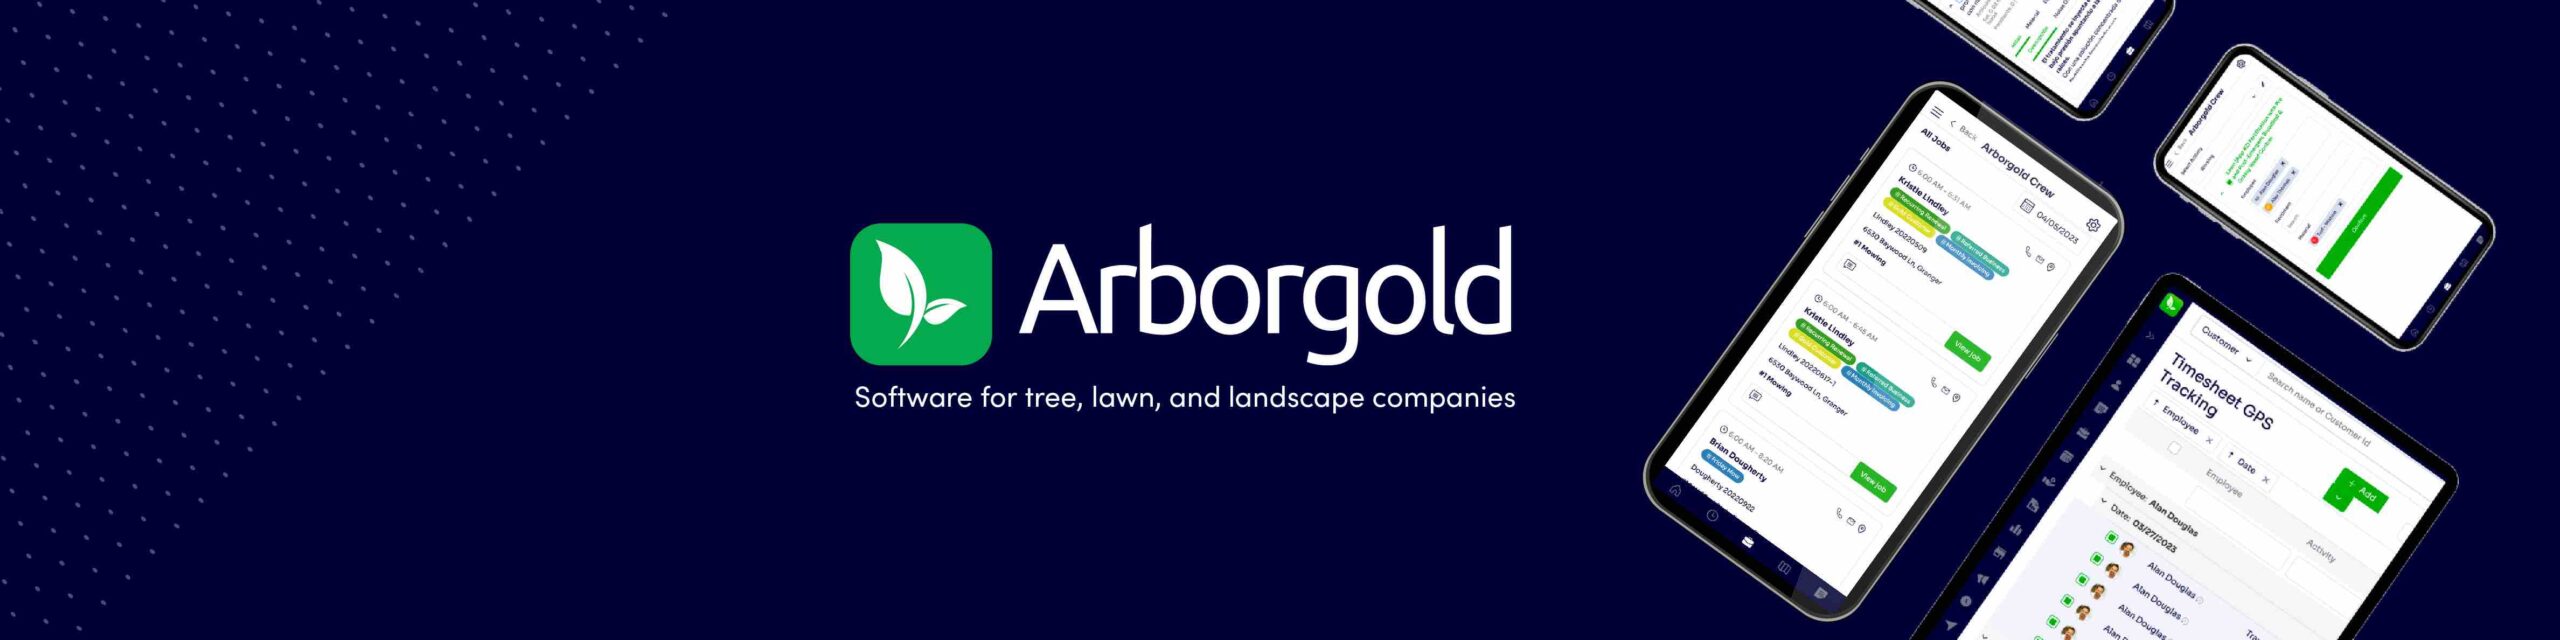 Arborgold_Social_Banners_LinkedInArborgold_